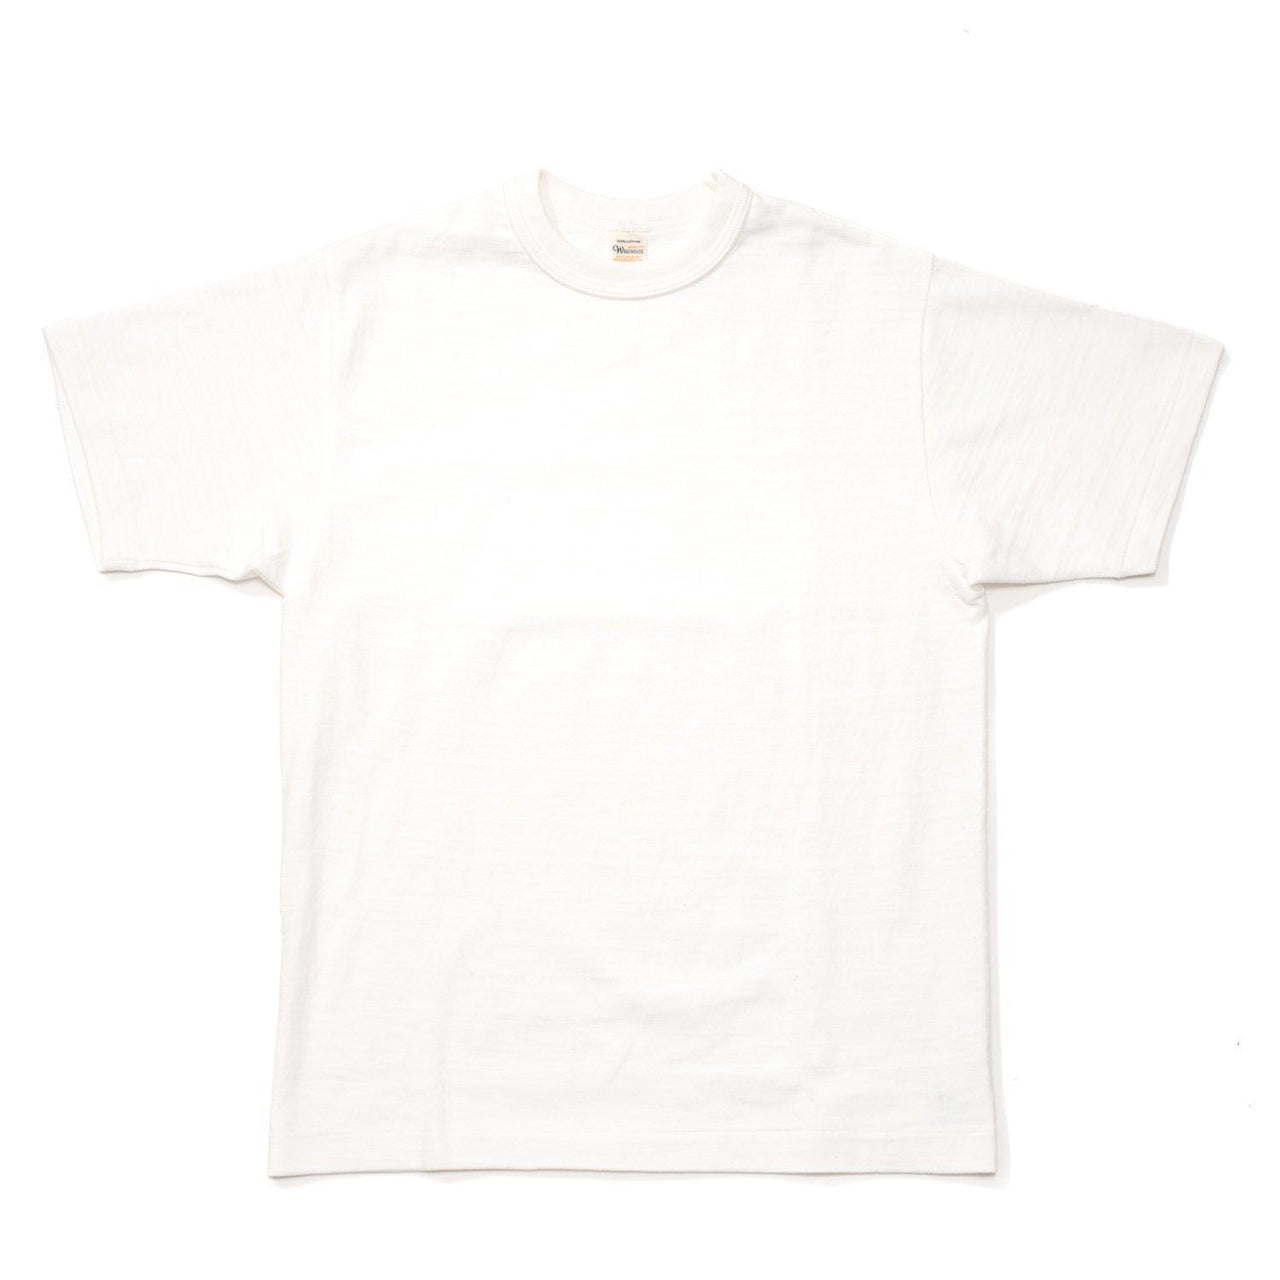 Warehouse & Co. Lot 4601 T-shirt White-T-shirt-Clutch Cafe